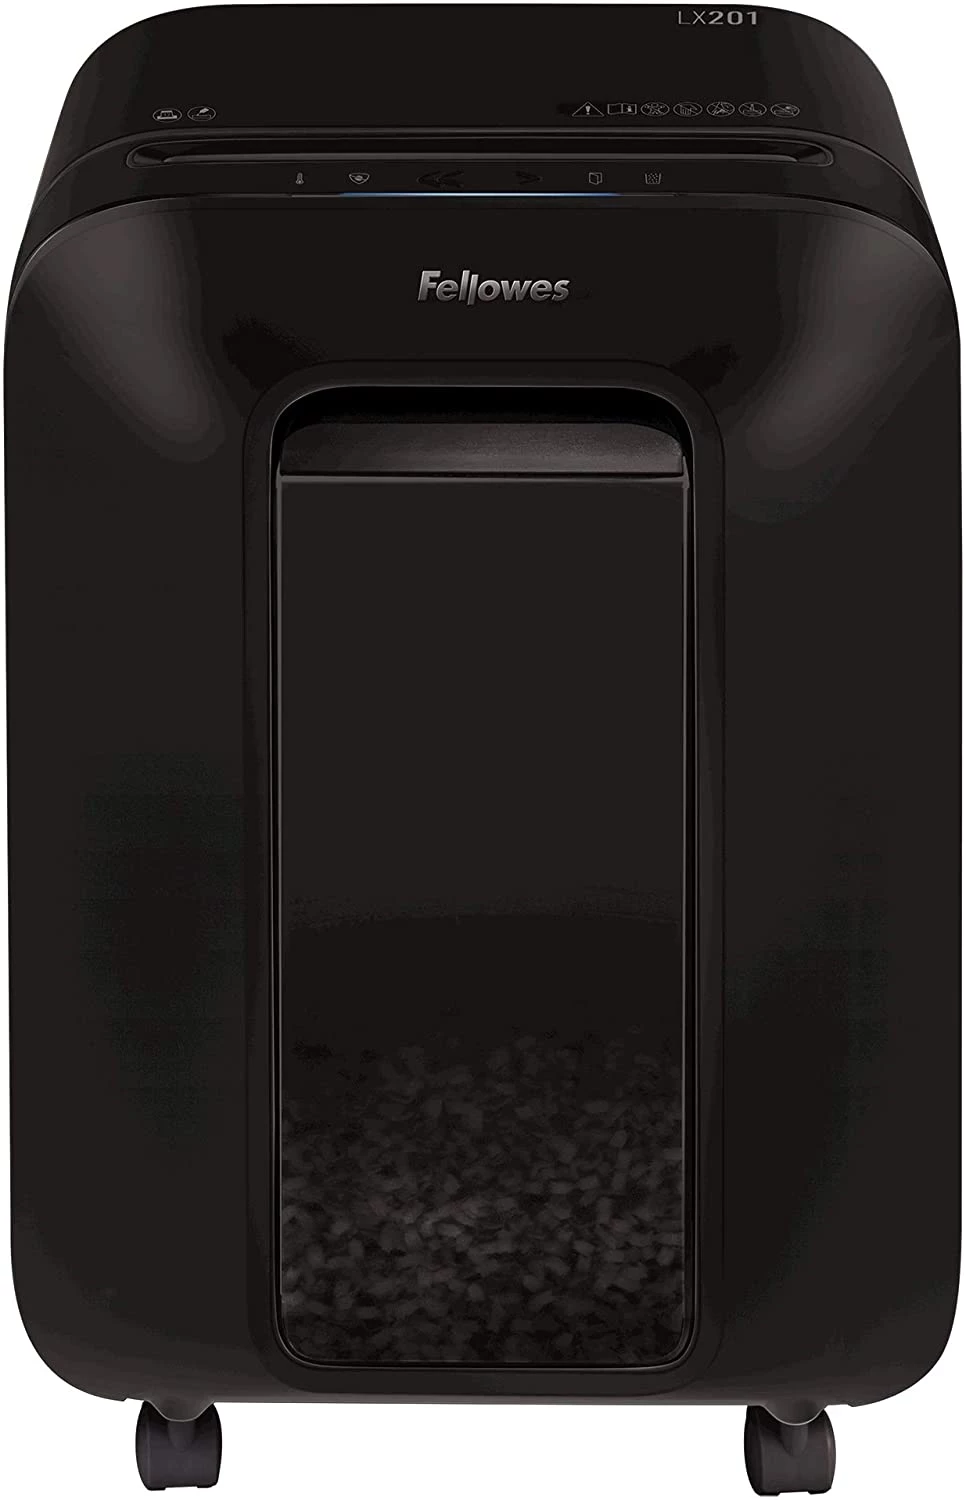 Fellowes LX201 Micro-Cut Shredder 粒狀碎紙機 (黑色) #FW5160001